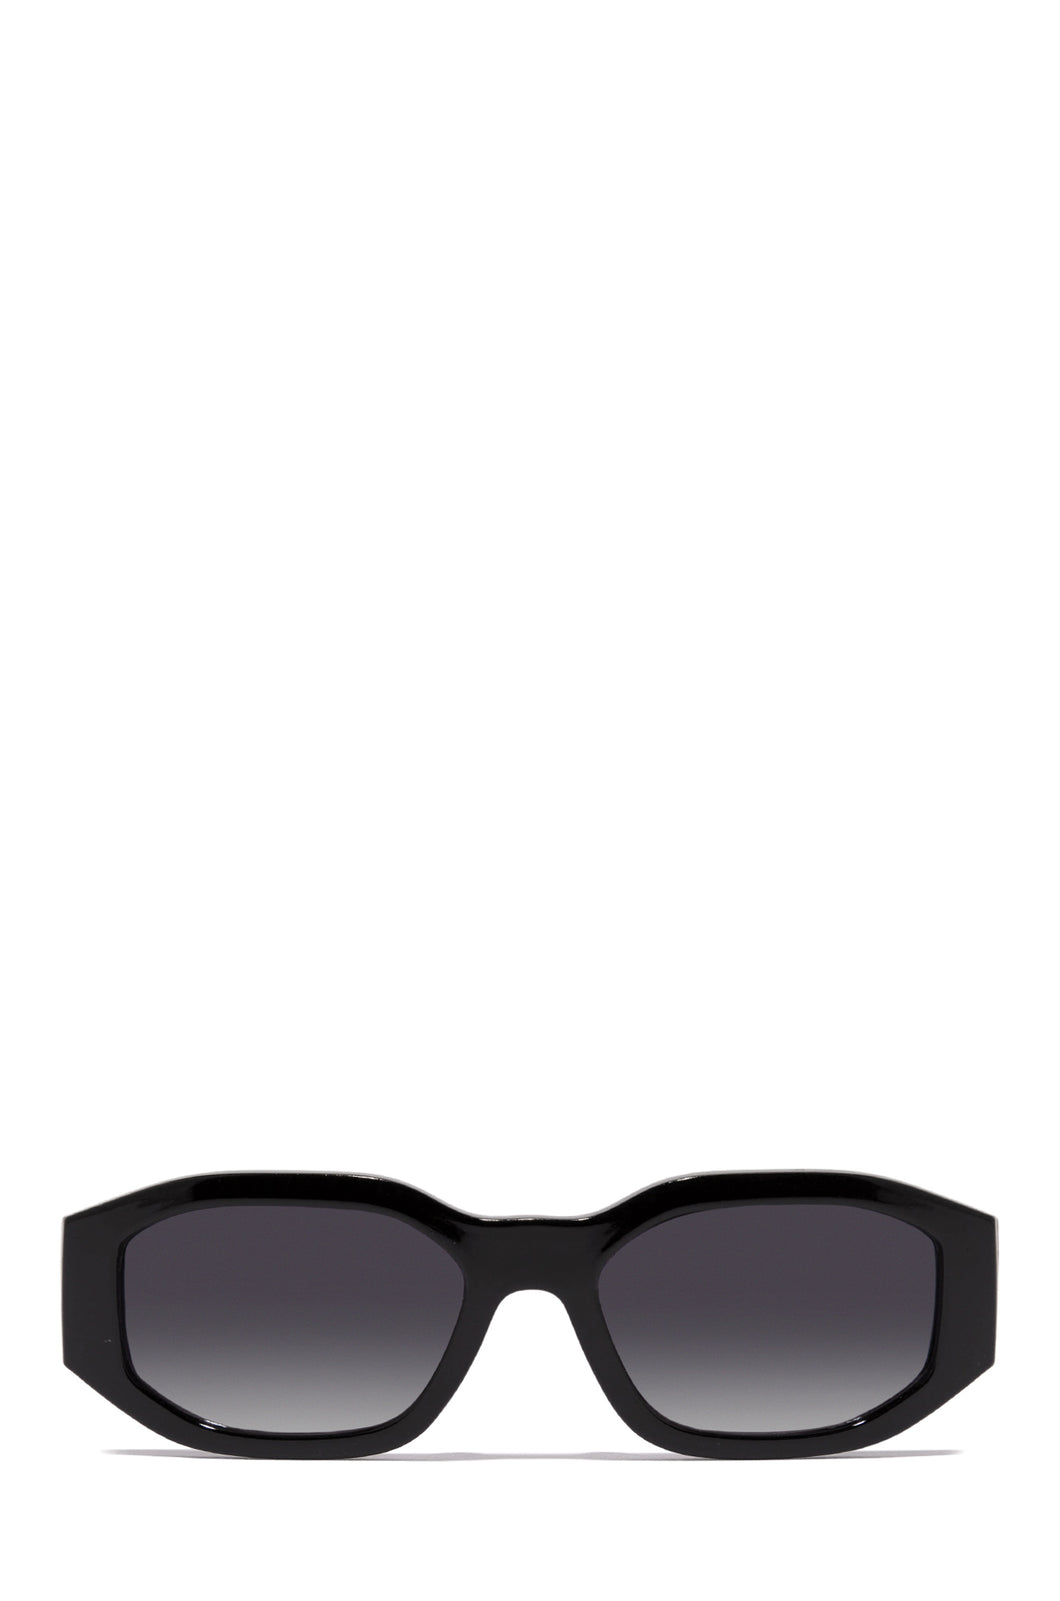 Black Clear Sunglasses